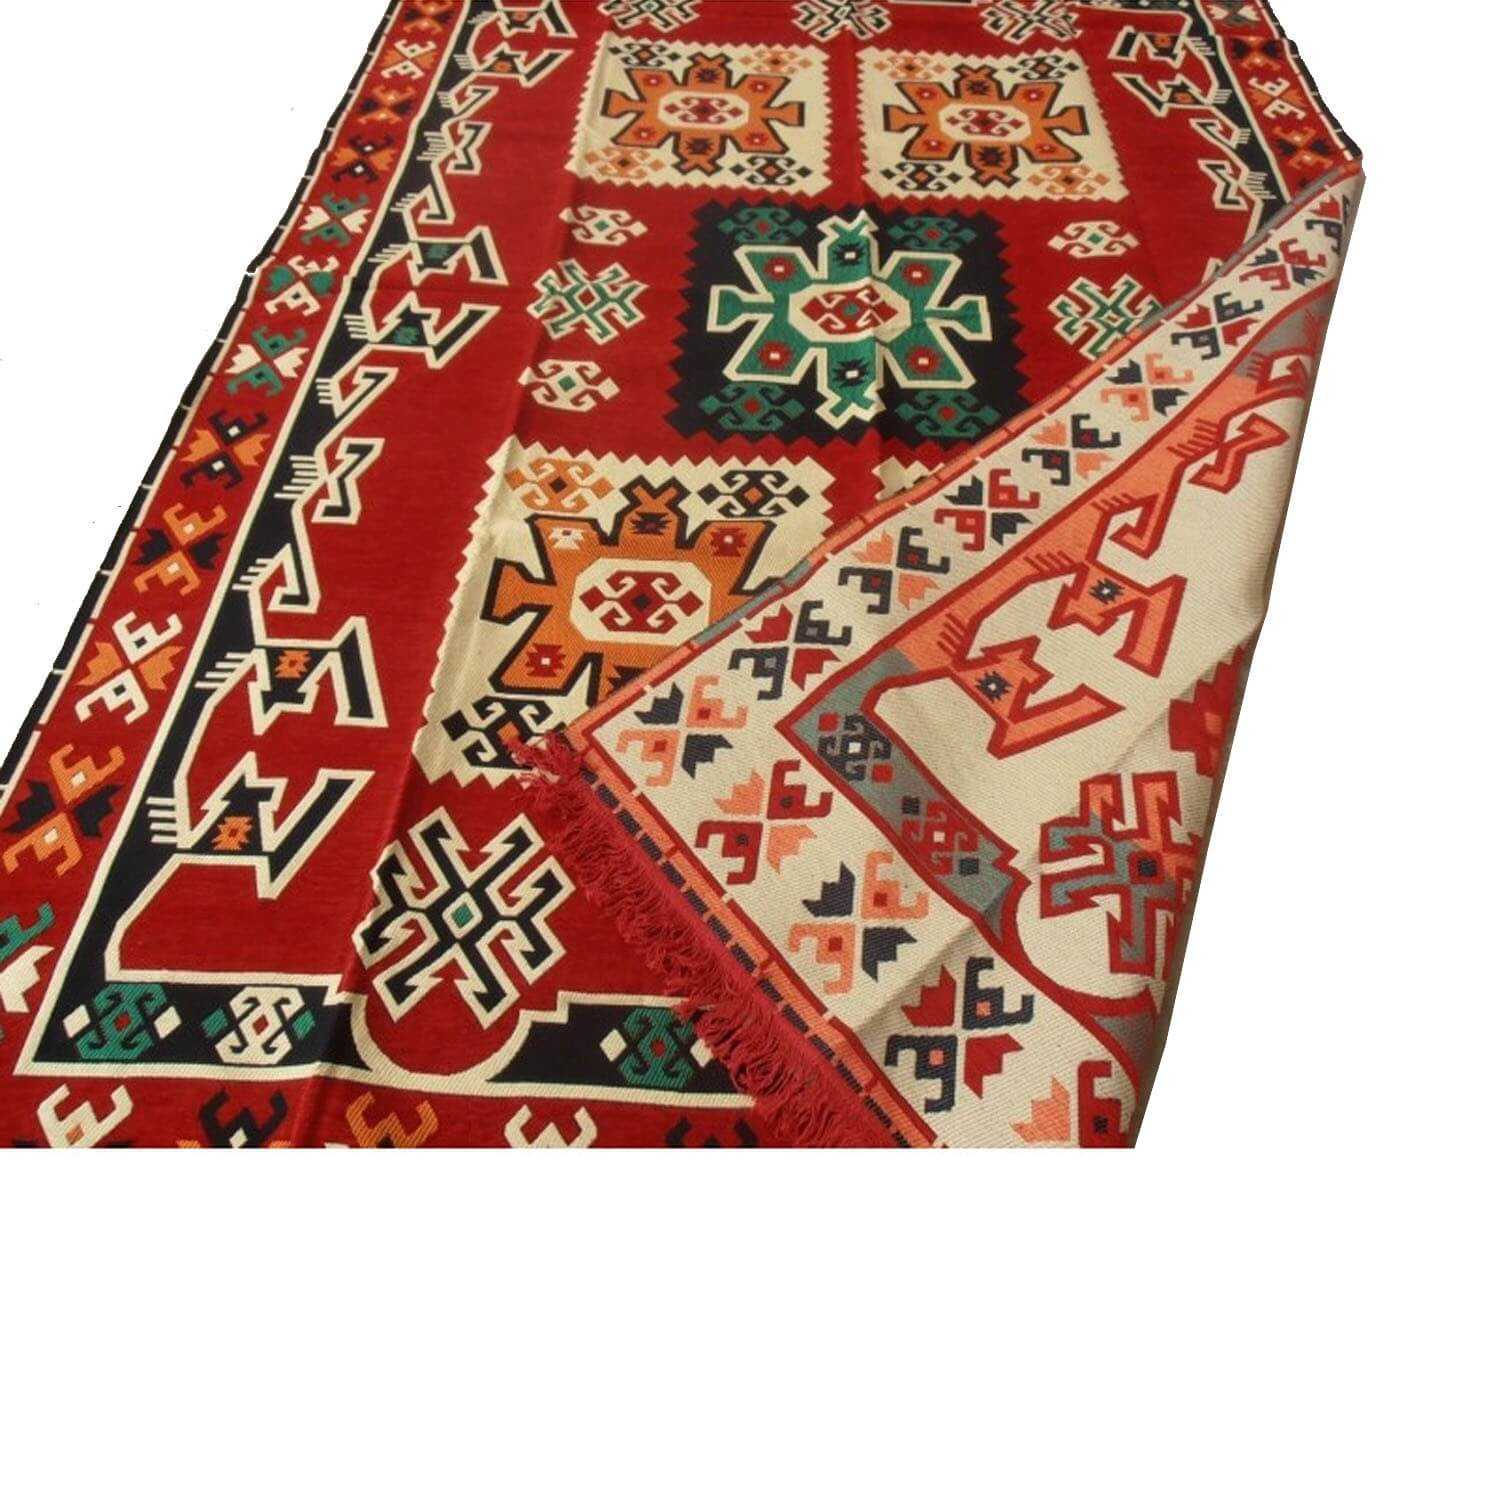 PERGAMON 300 x 200 cm oriental Turkish kilim rug